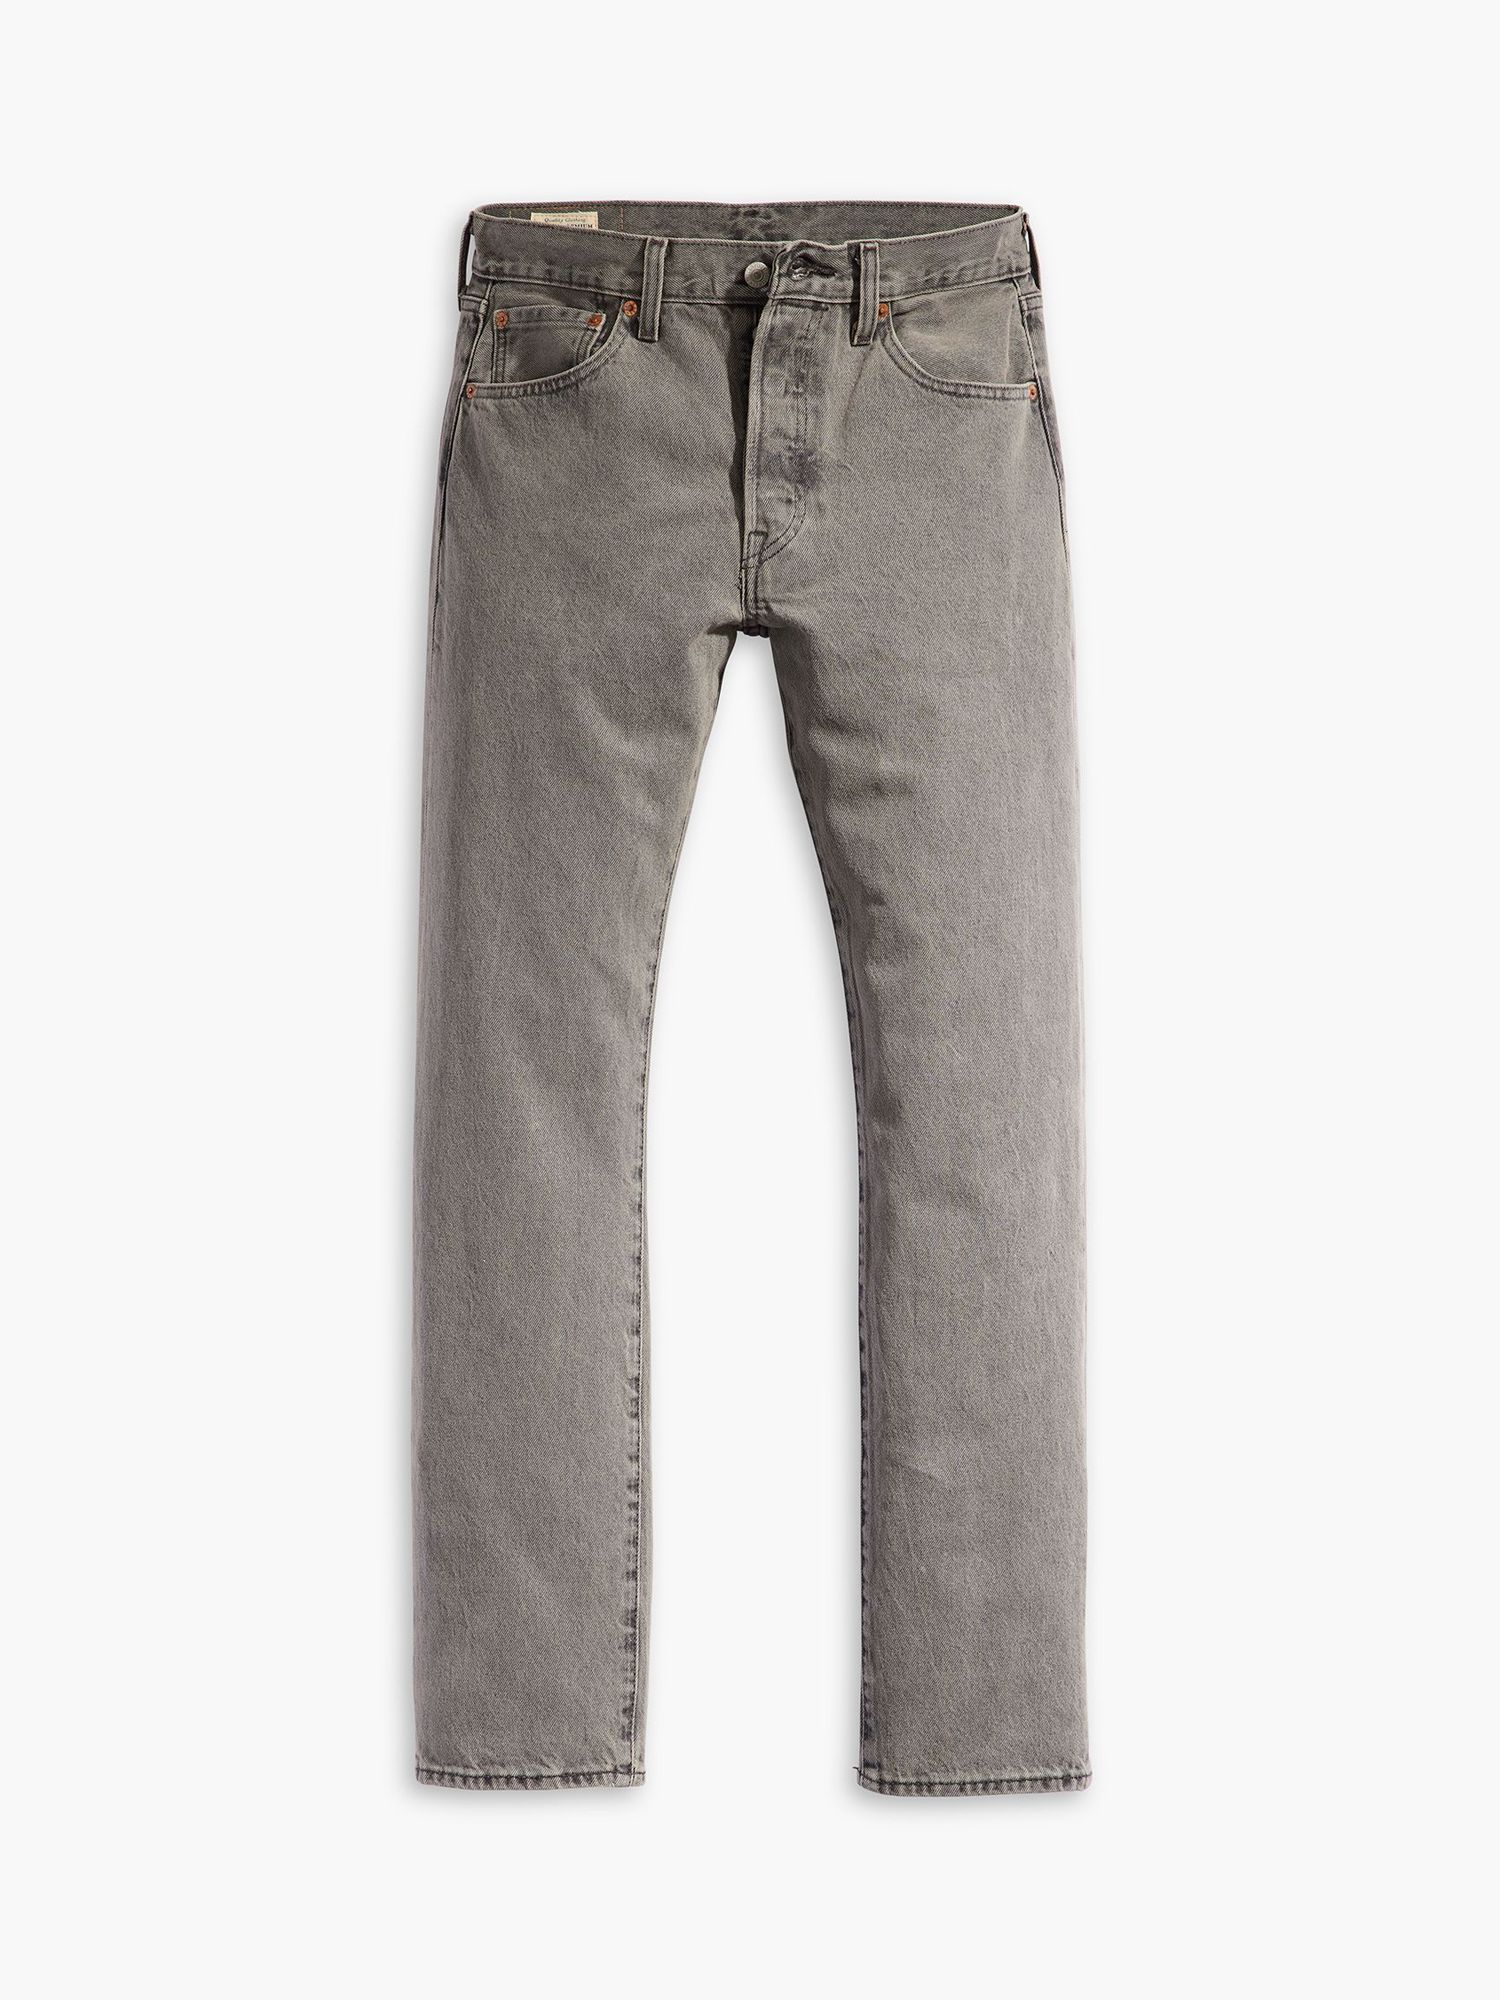 Levi's 501 Original Classic Straight Leg Jeans, Grey